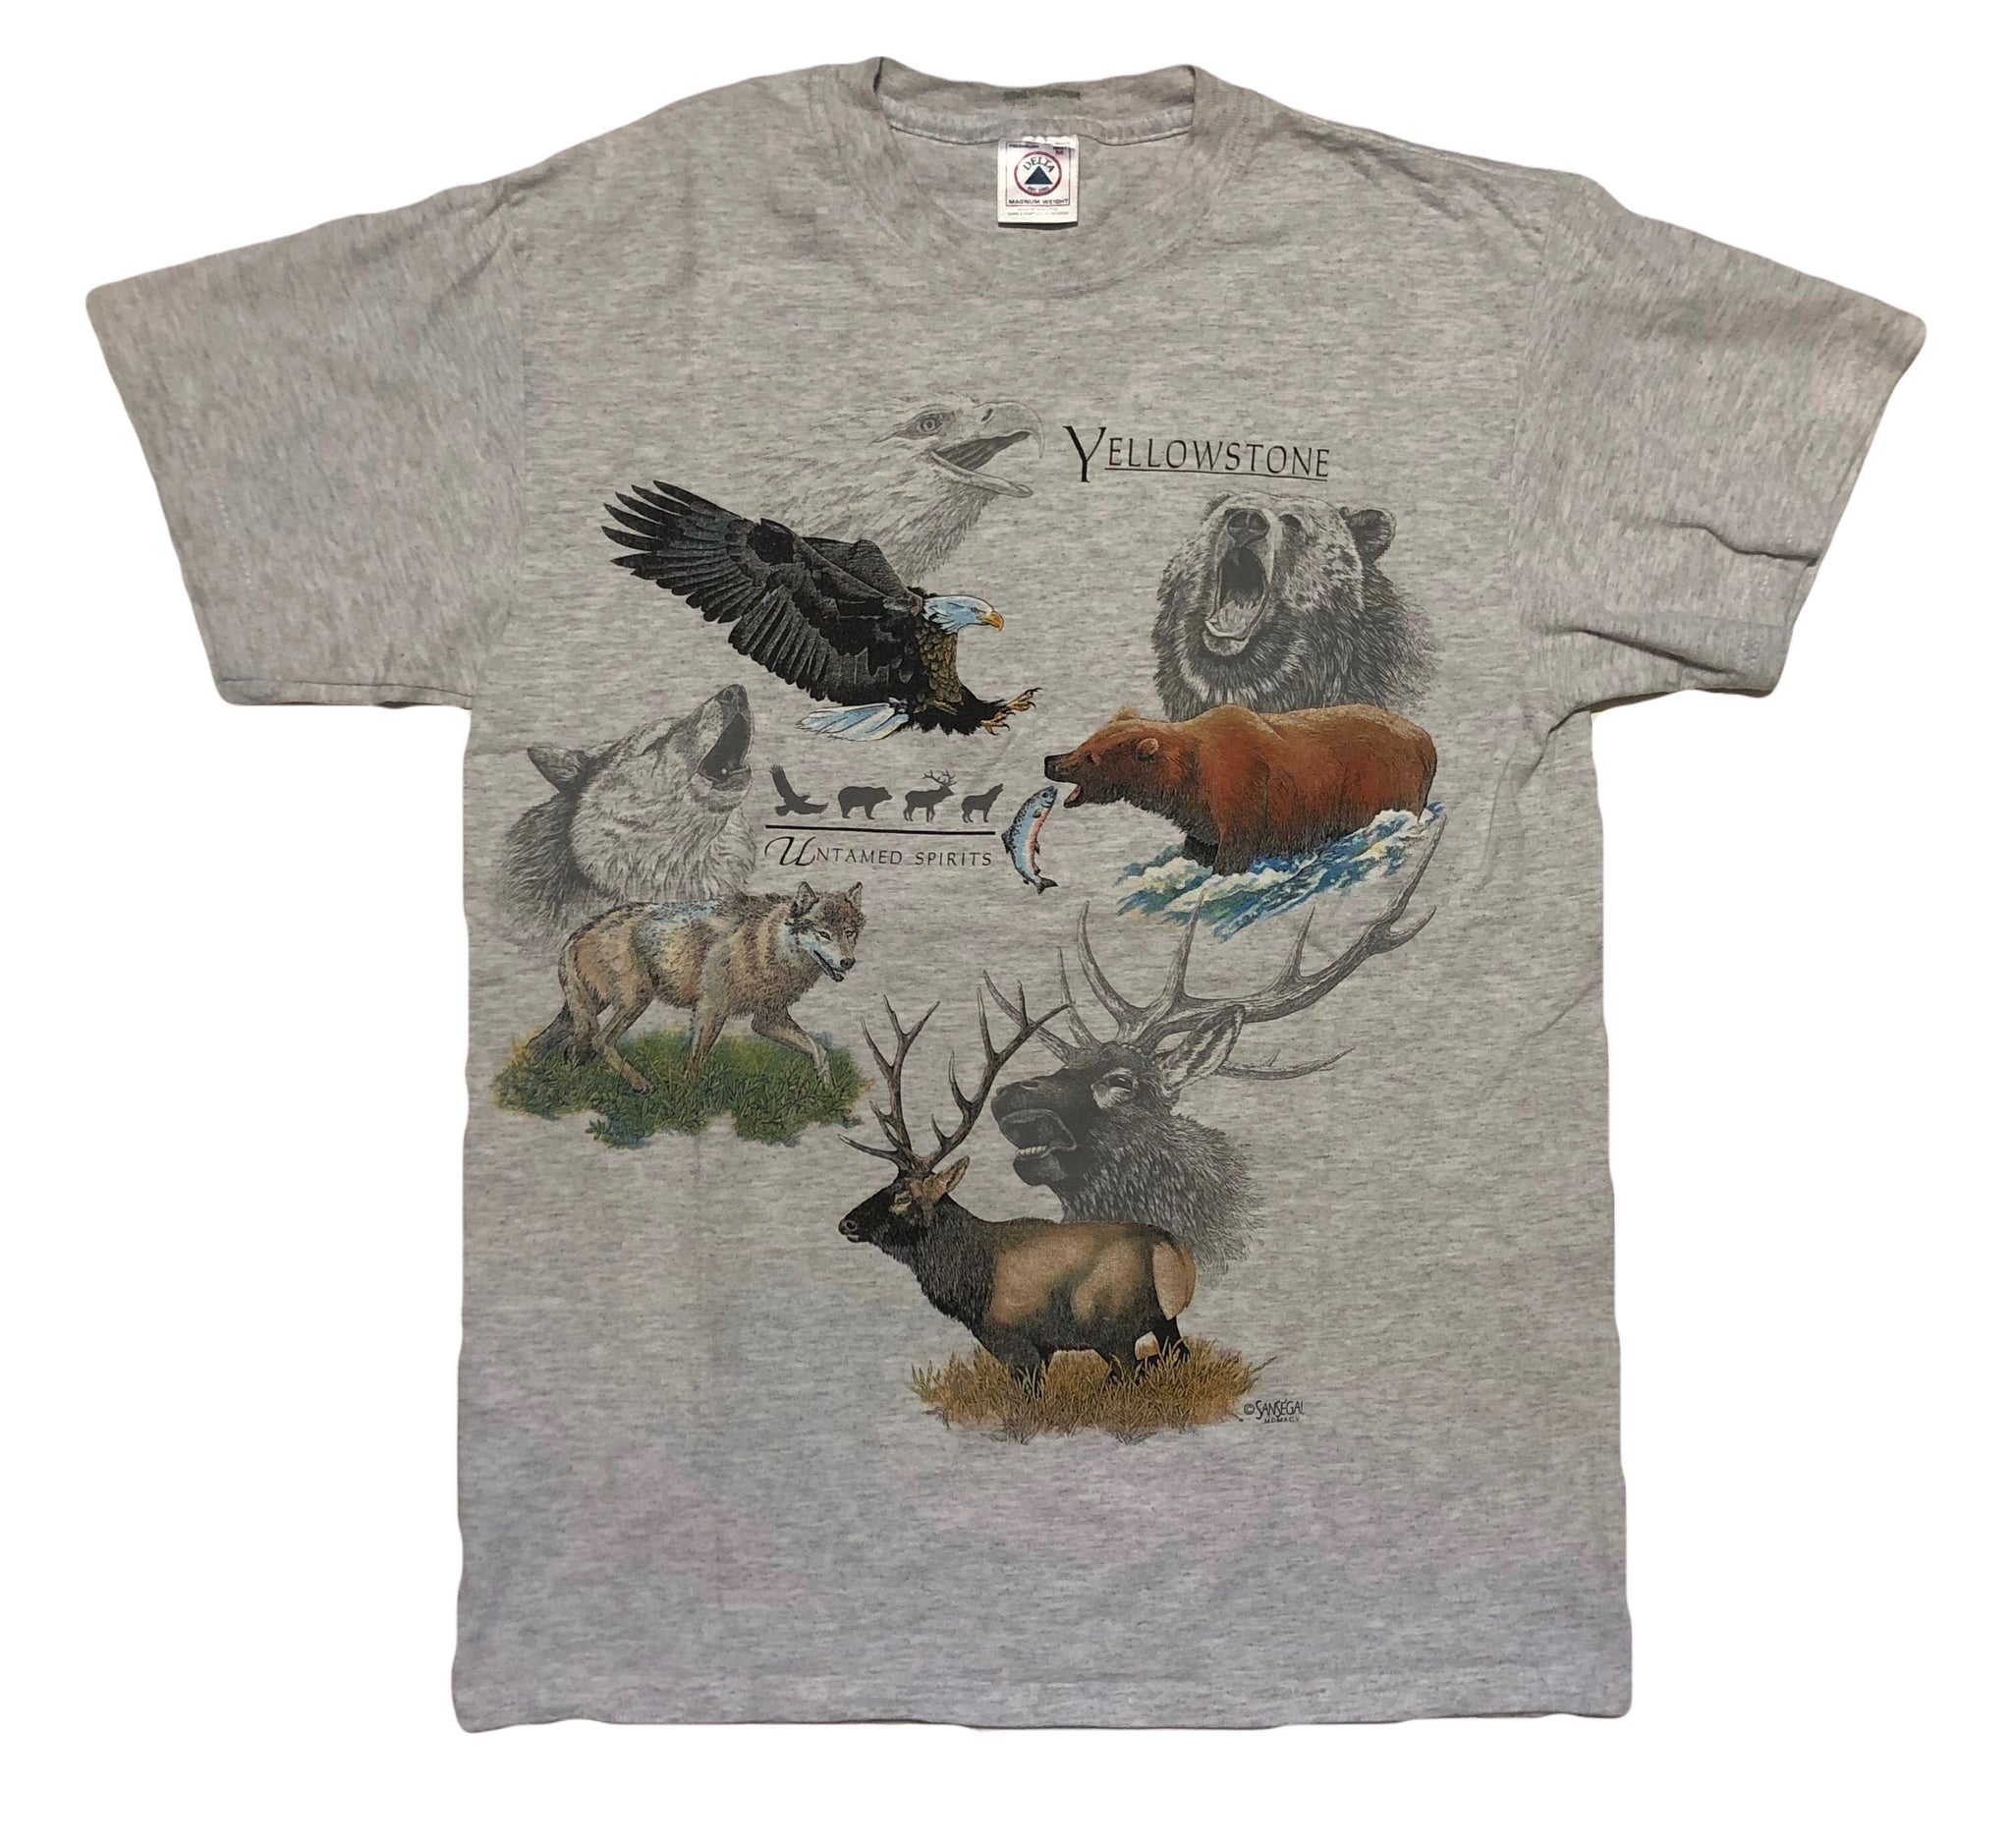 Vintage 90s Yellowstone National Park Shirt Size Medium - Beyond 94